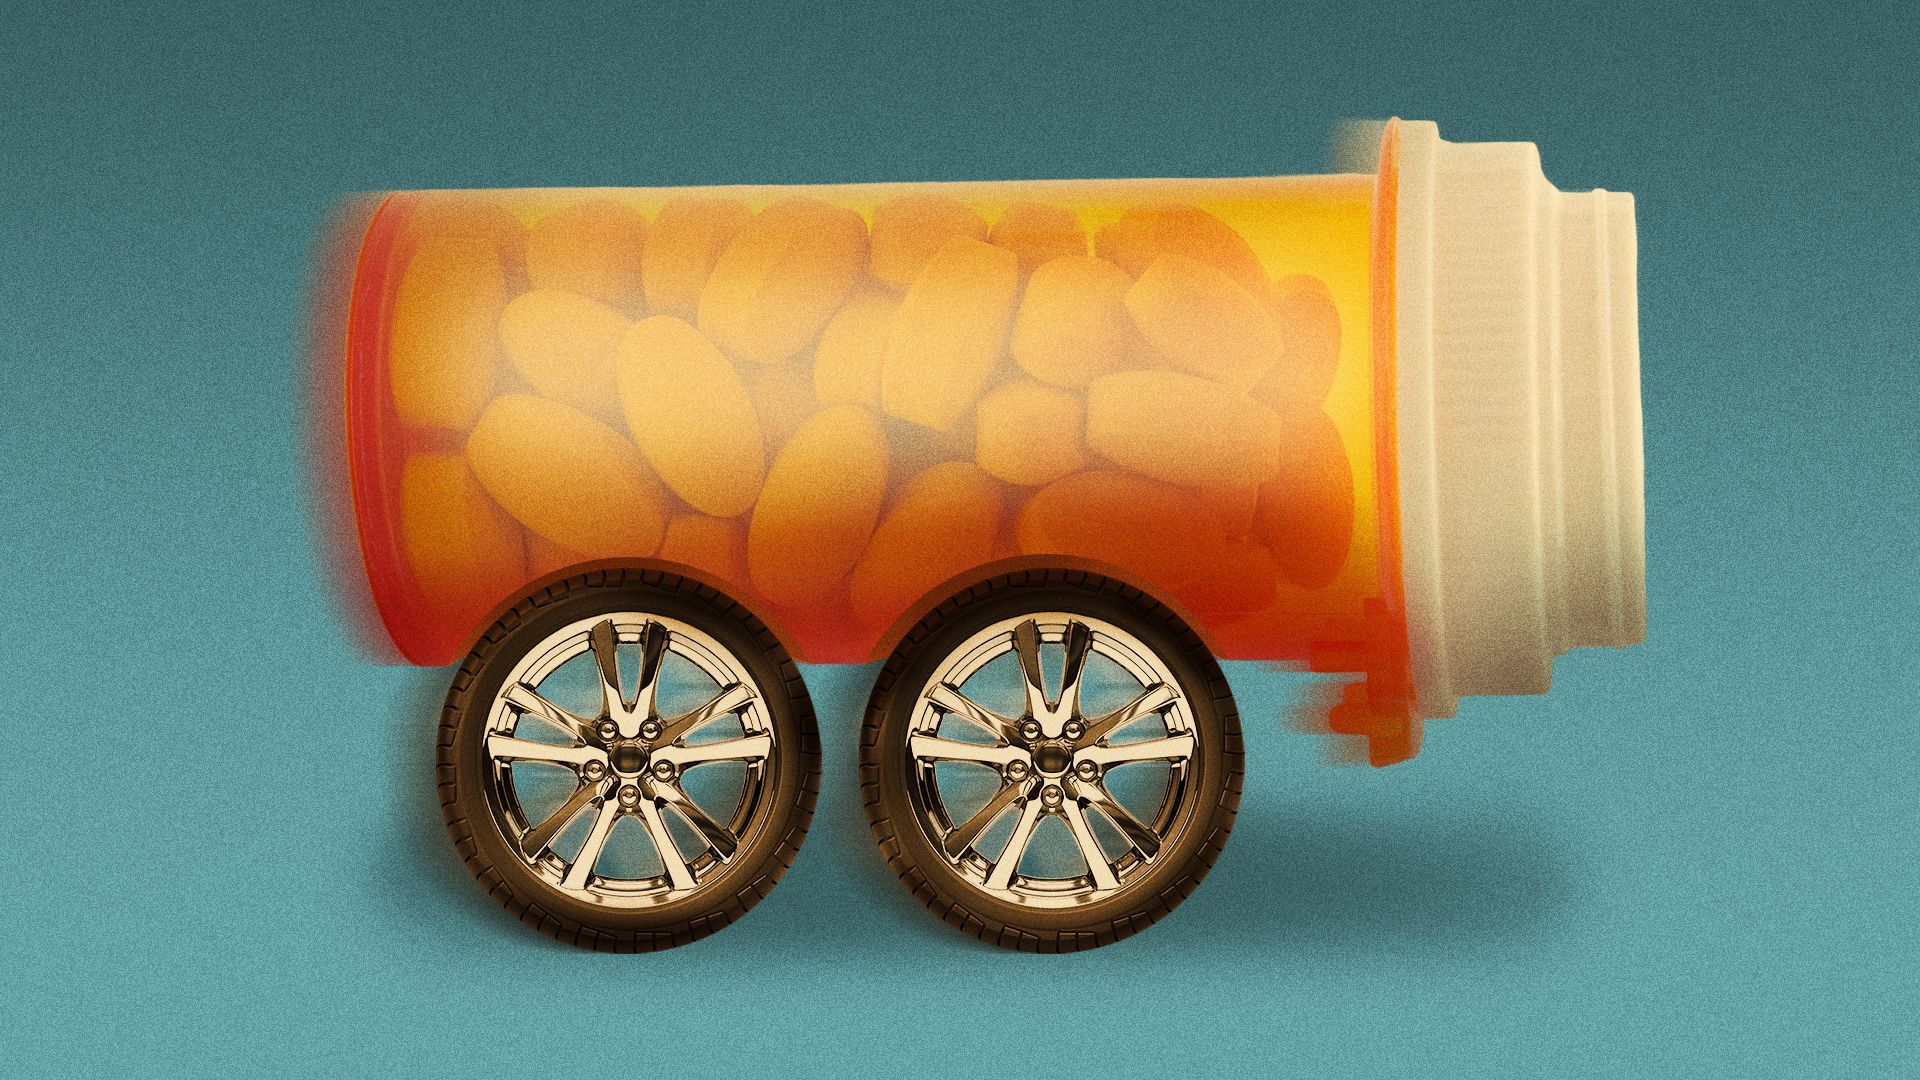 Illustration of a prescription pill bottle on wheels.